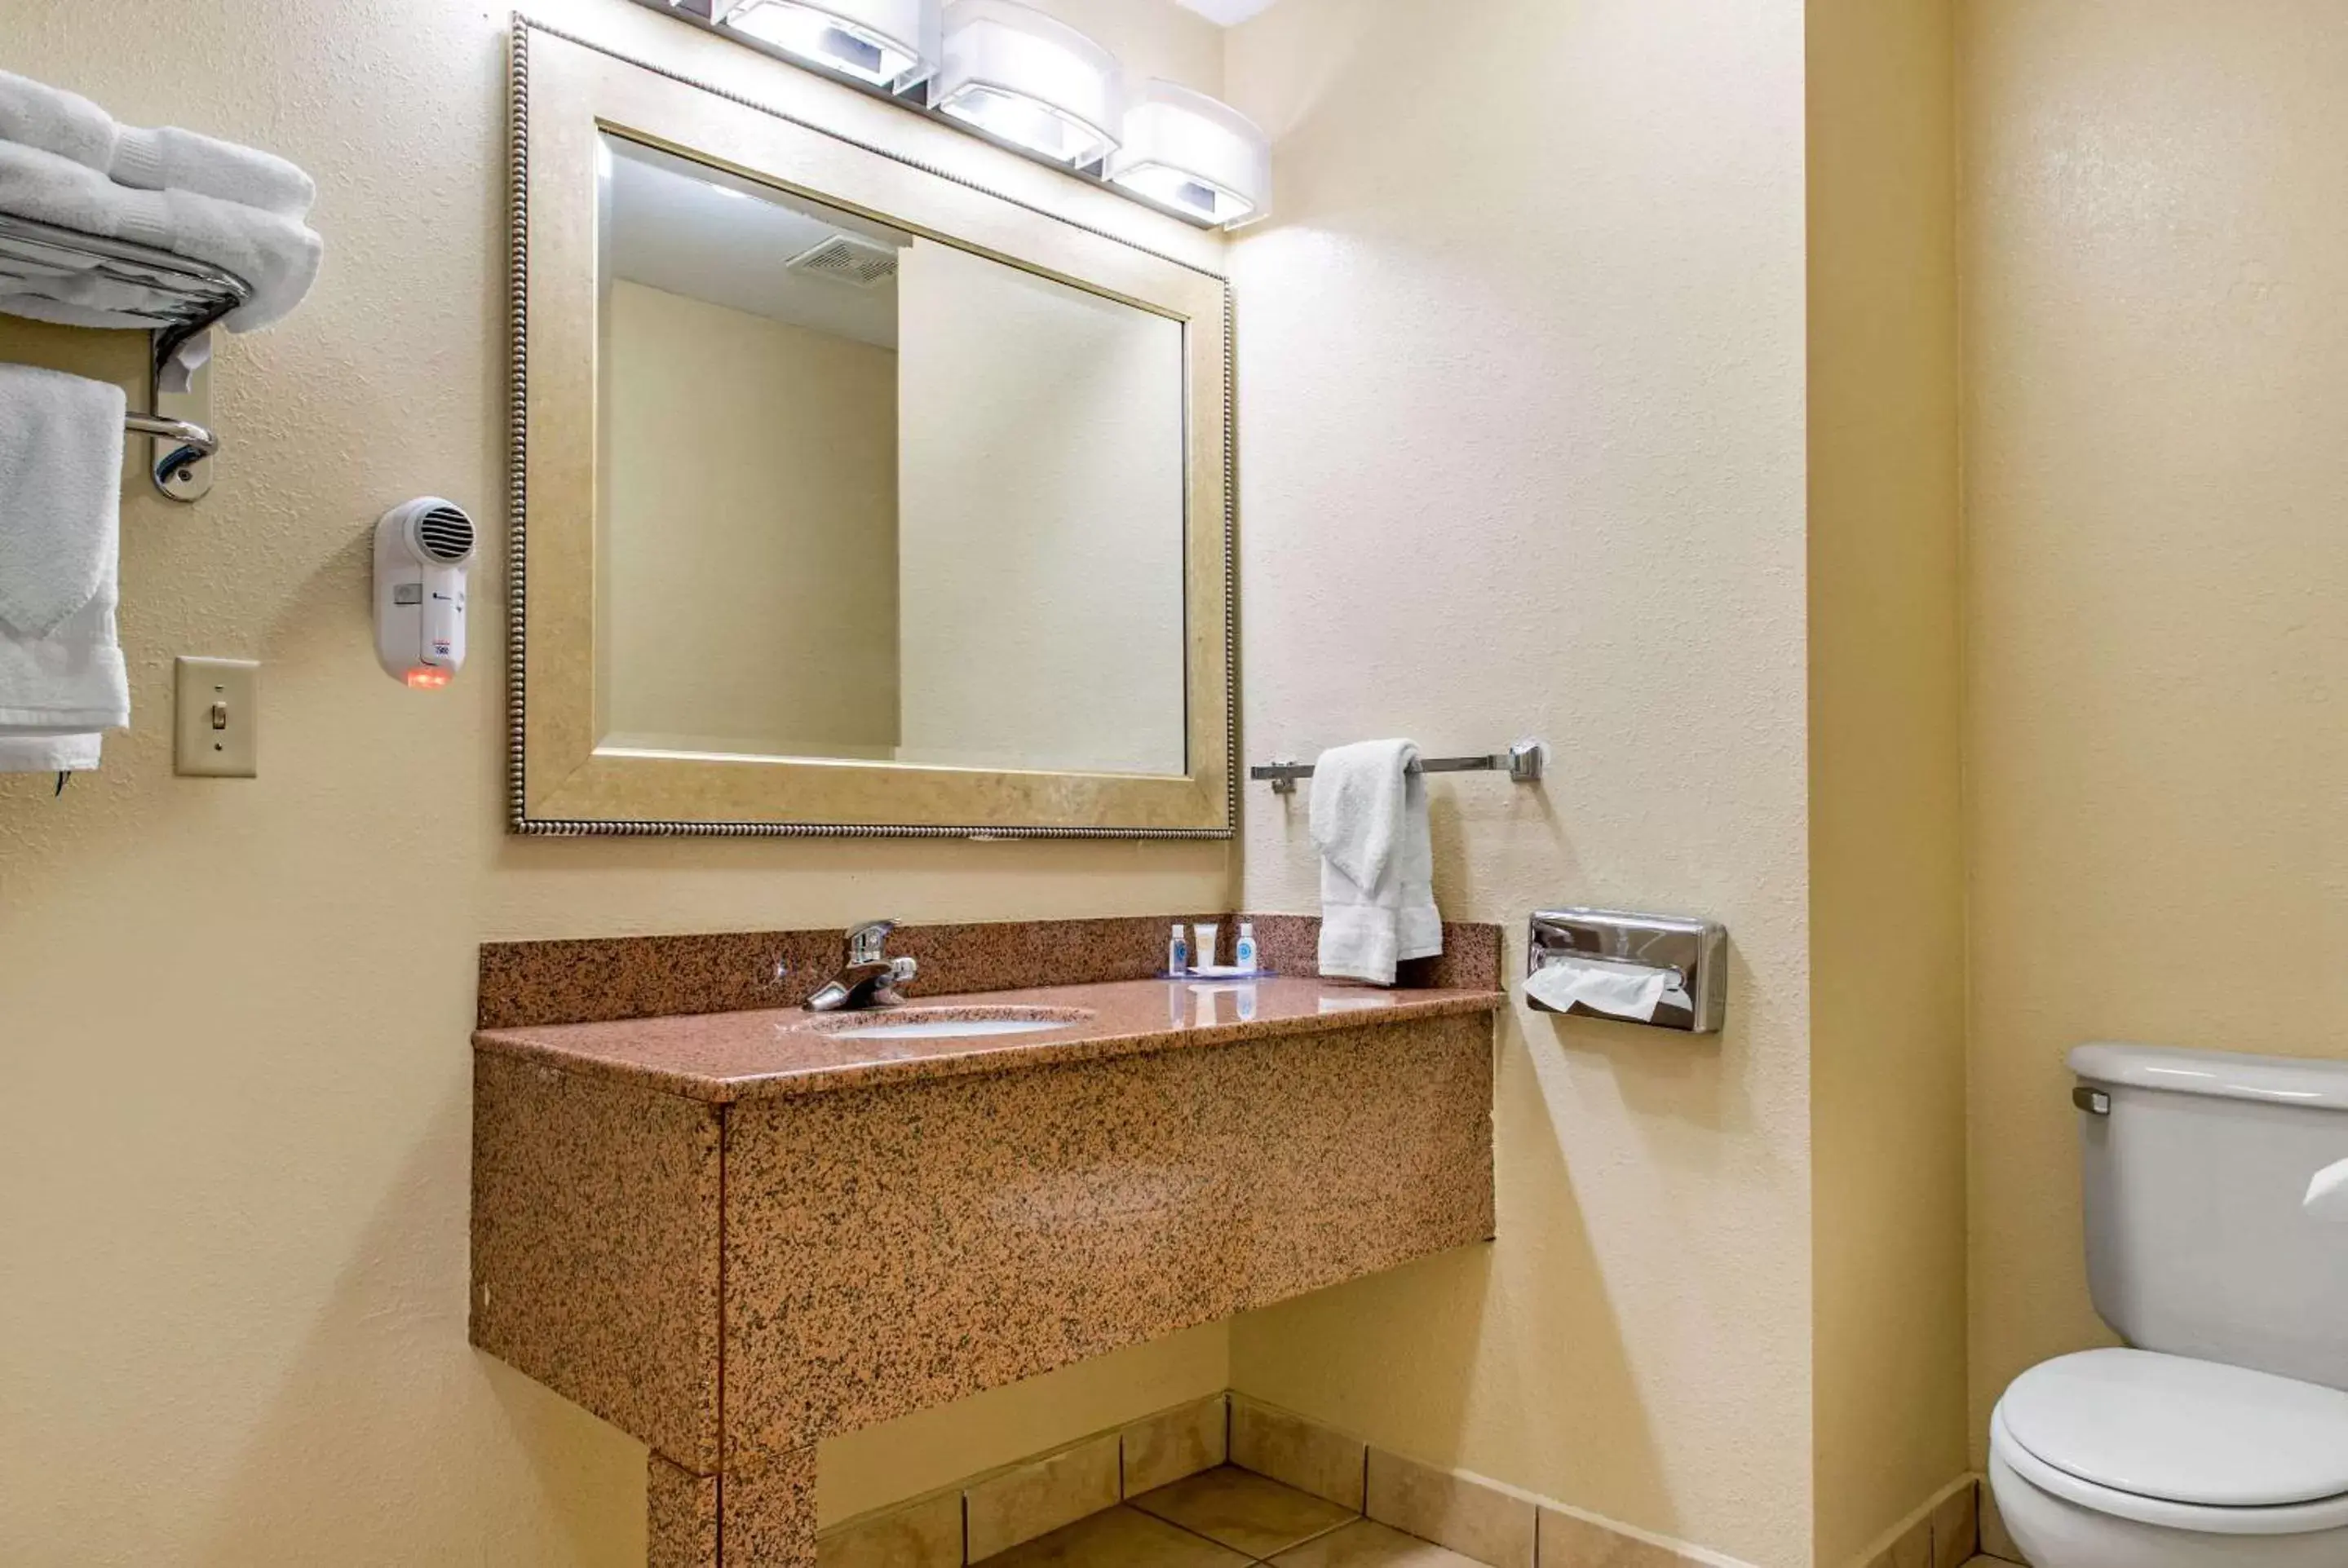 Photo of the whole room, Bathroom in Quality Inn Jacksonville near I-72